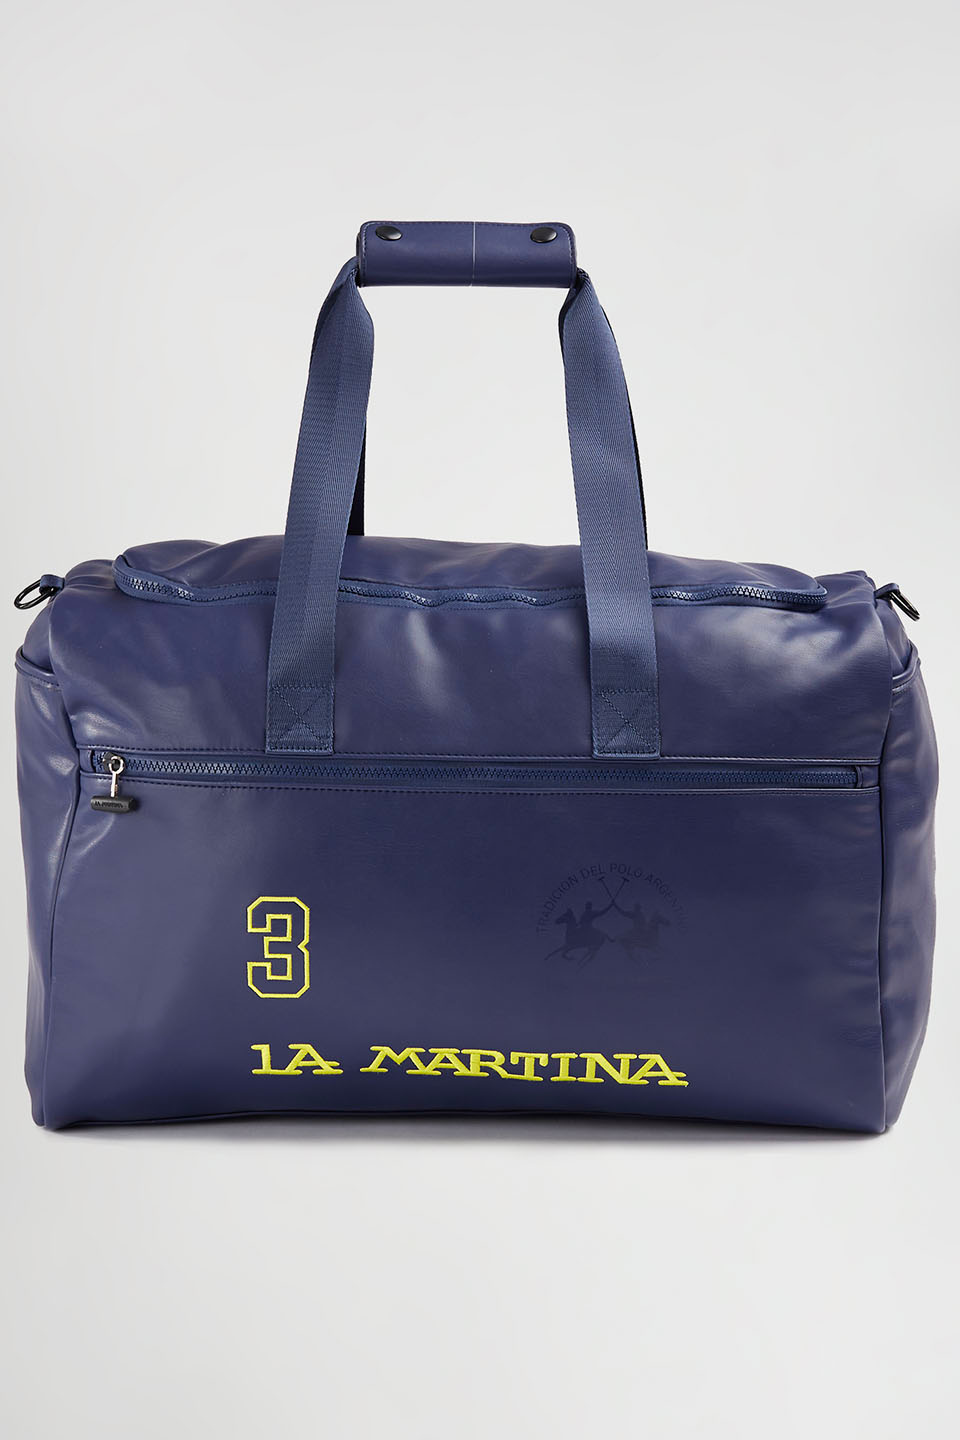 Zealot gallon Two degrees PU leather duffel bag Navy La Martina | Shop Online